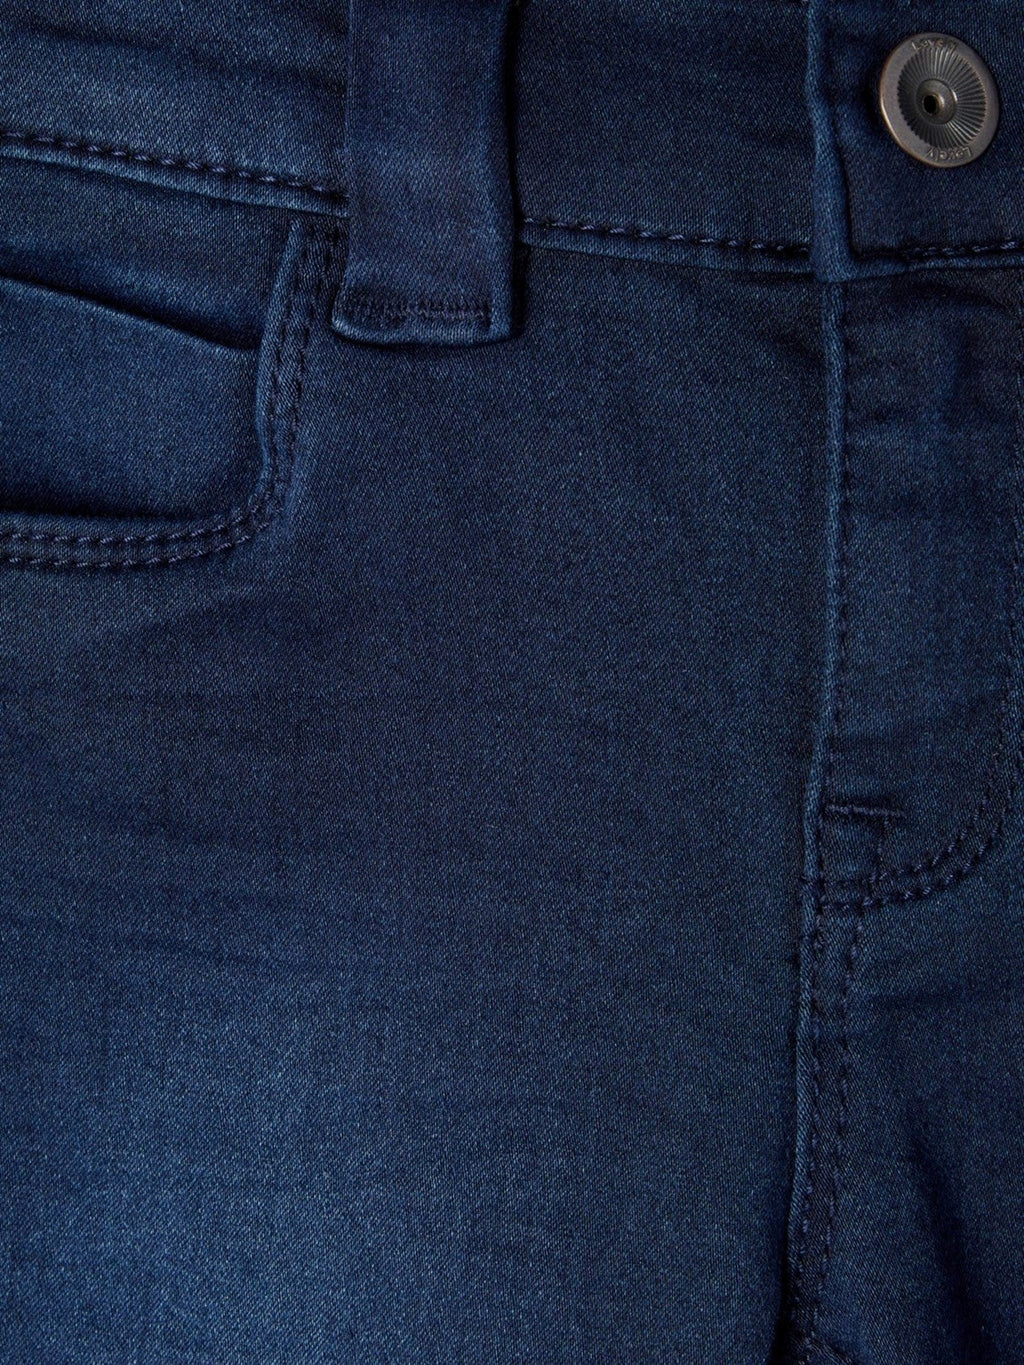 Jeans Polly - Denim Dark Blue